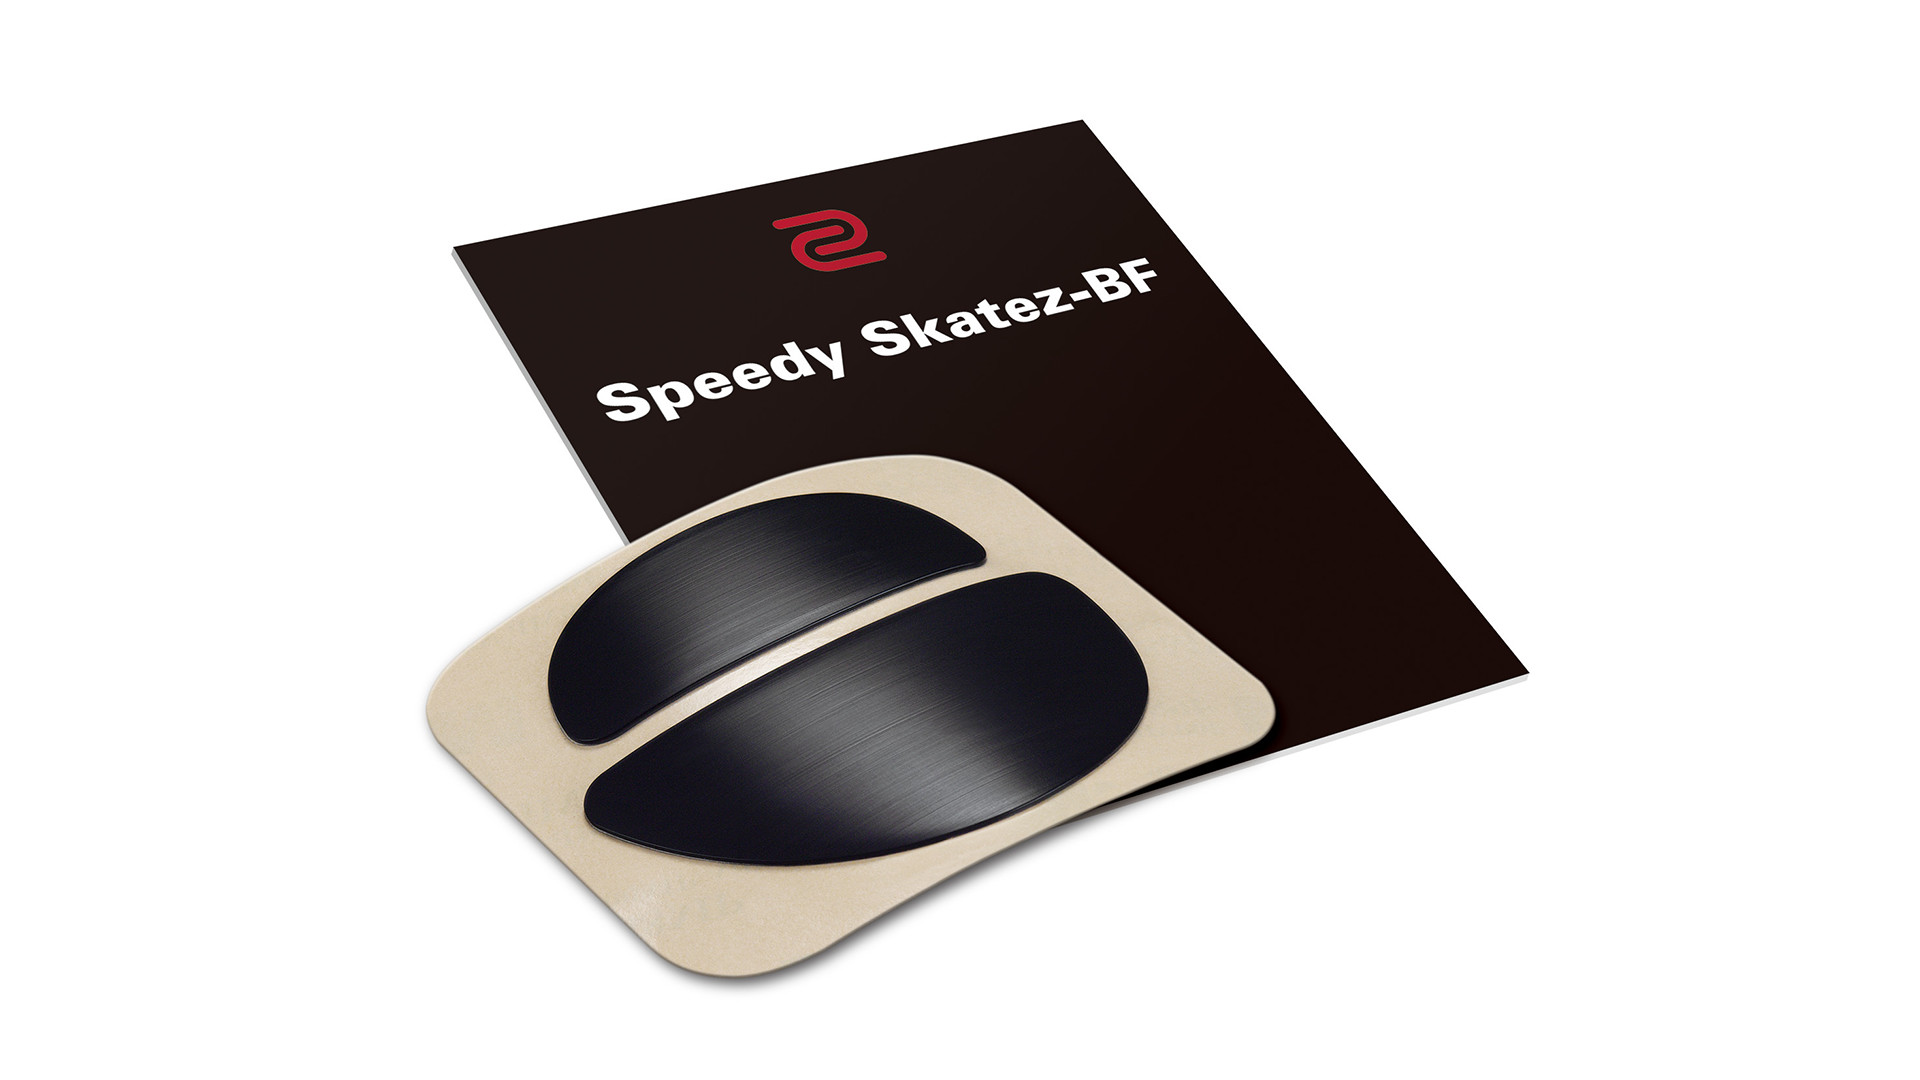 BENQ Zowie Тефлоновые накладки для мышей Speedy Skatez-BF, для серии EC1, EC2, толщина 0,6 мм.